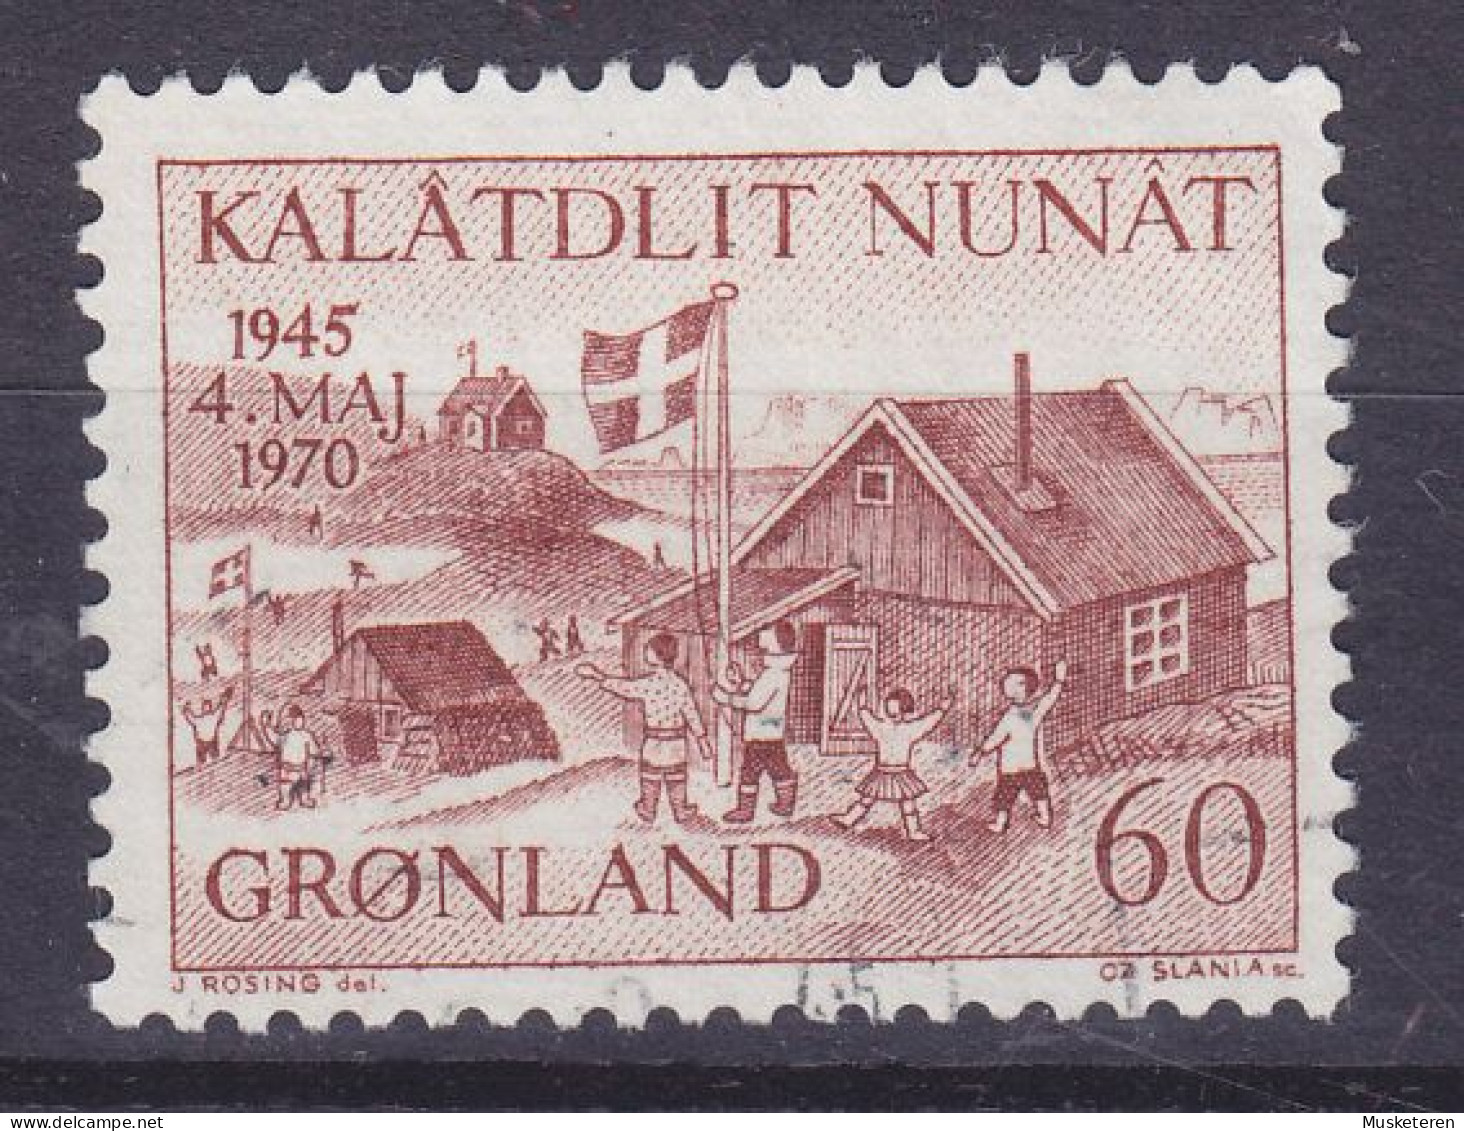 Greenland 1970 Mi. 76, 60 Ø Jahrestag Der Befreiung Dänemarks (Cz. Slania) - Usados